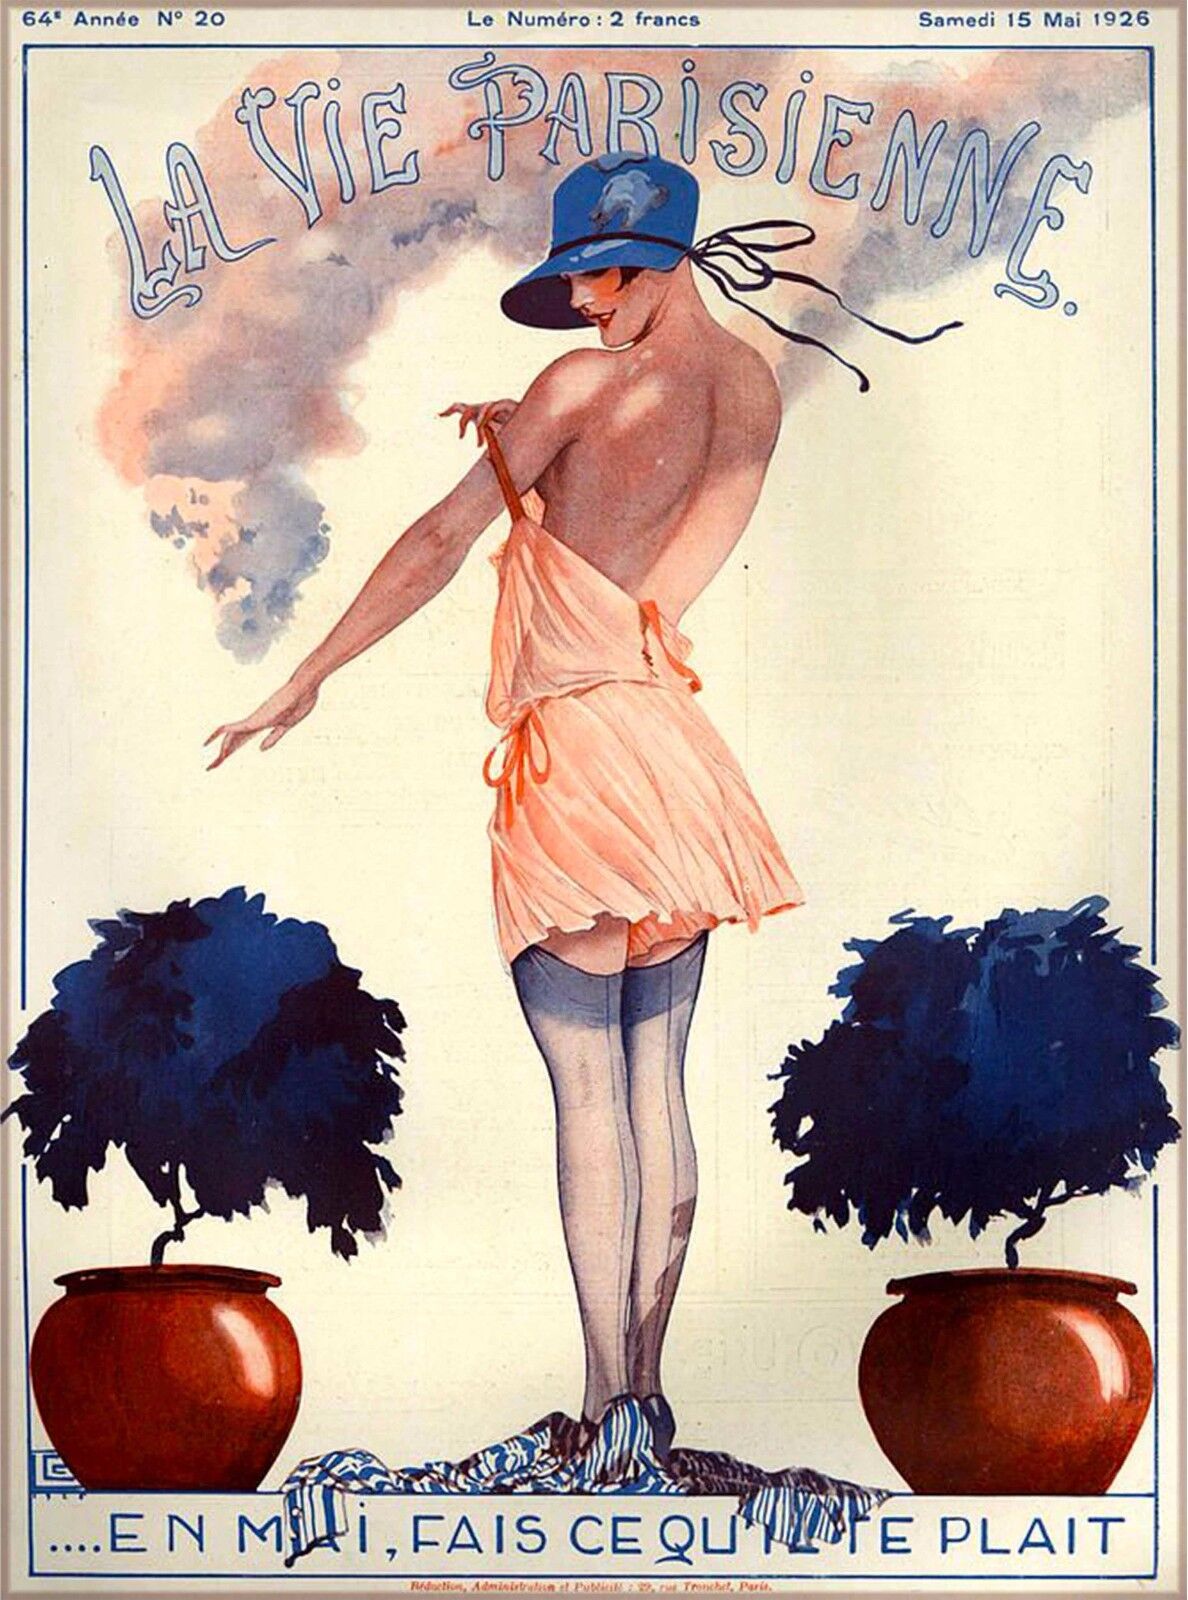 1926 La Vie Parisienne Undress French Riviera France Travel Advertisement Poster